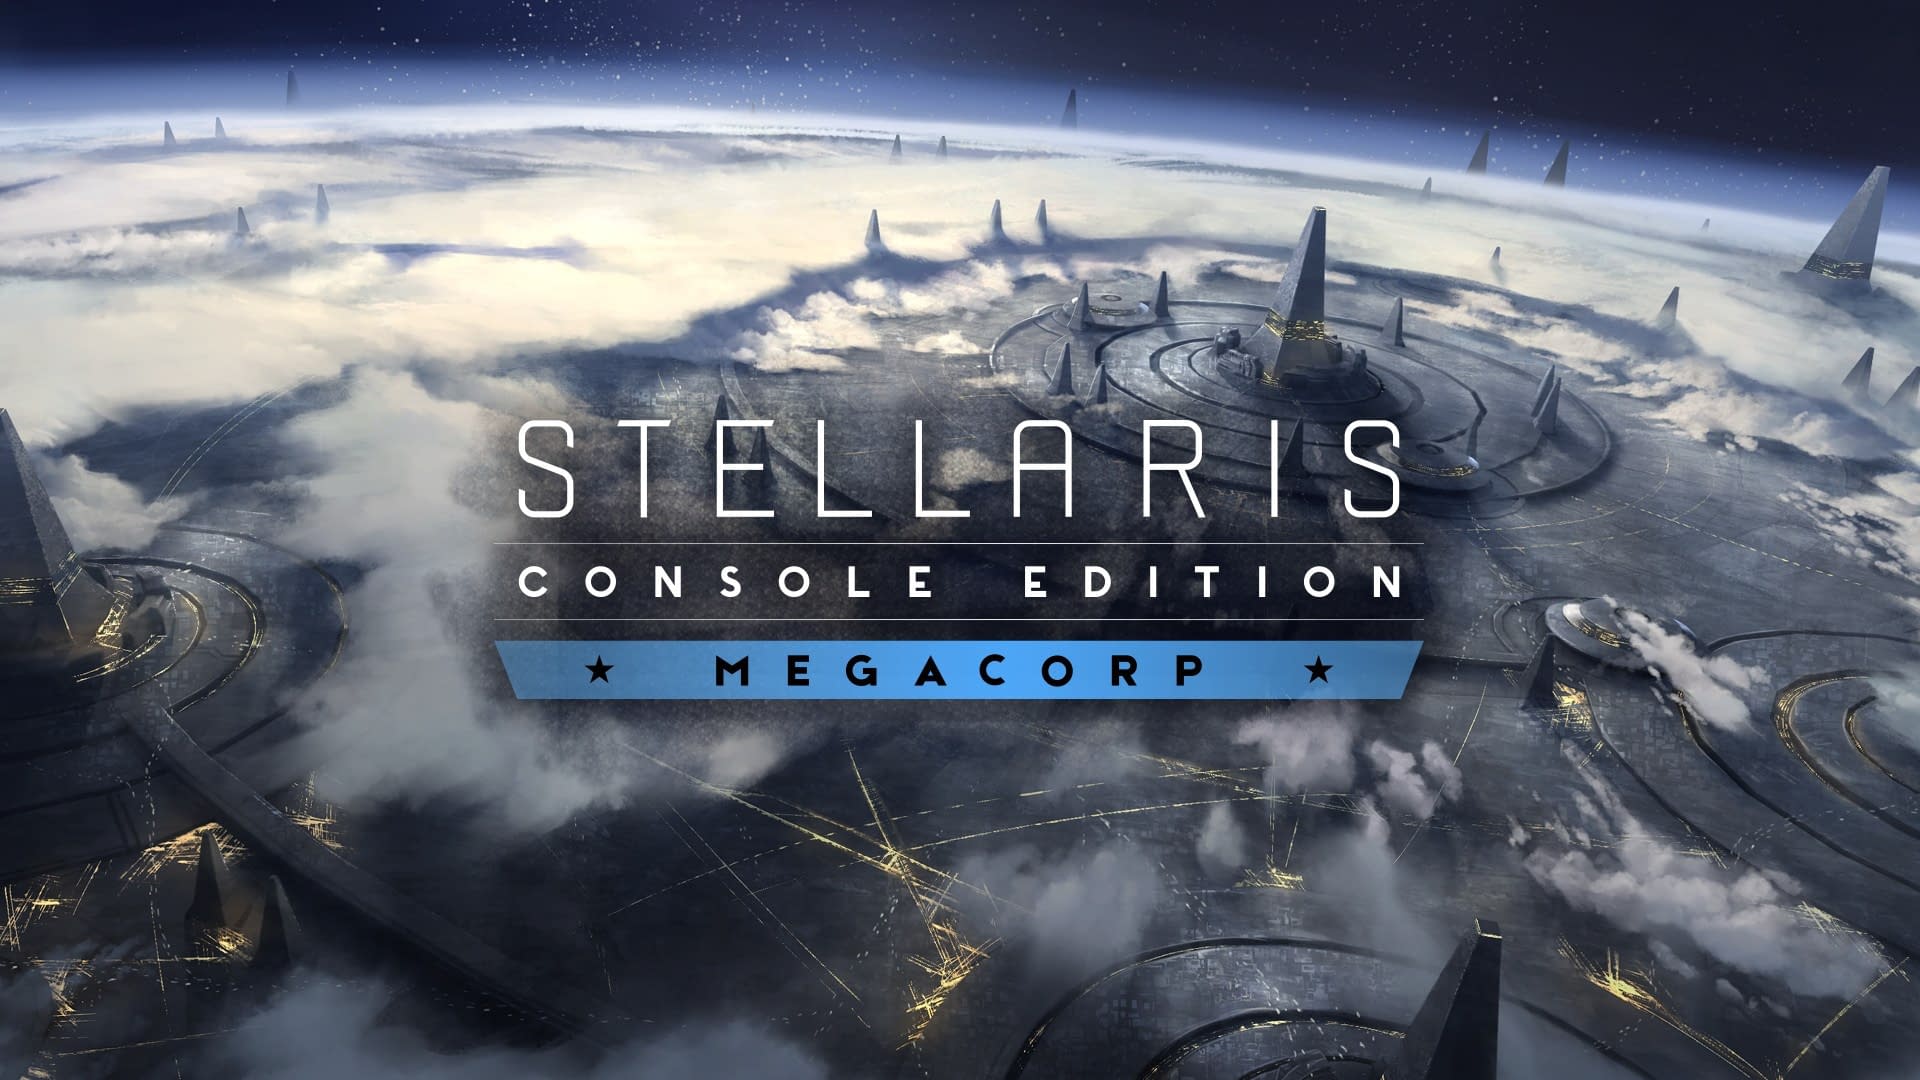 Stellaris Console Edition Receives The MegaCorp DLC